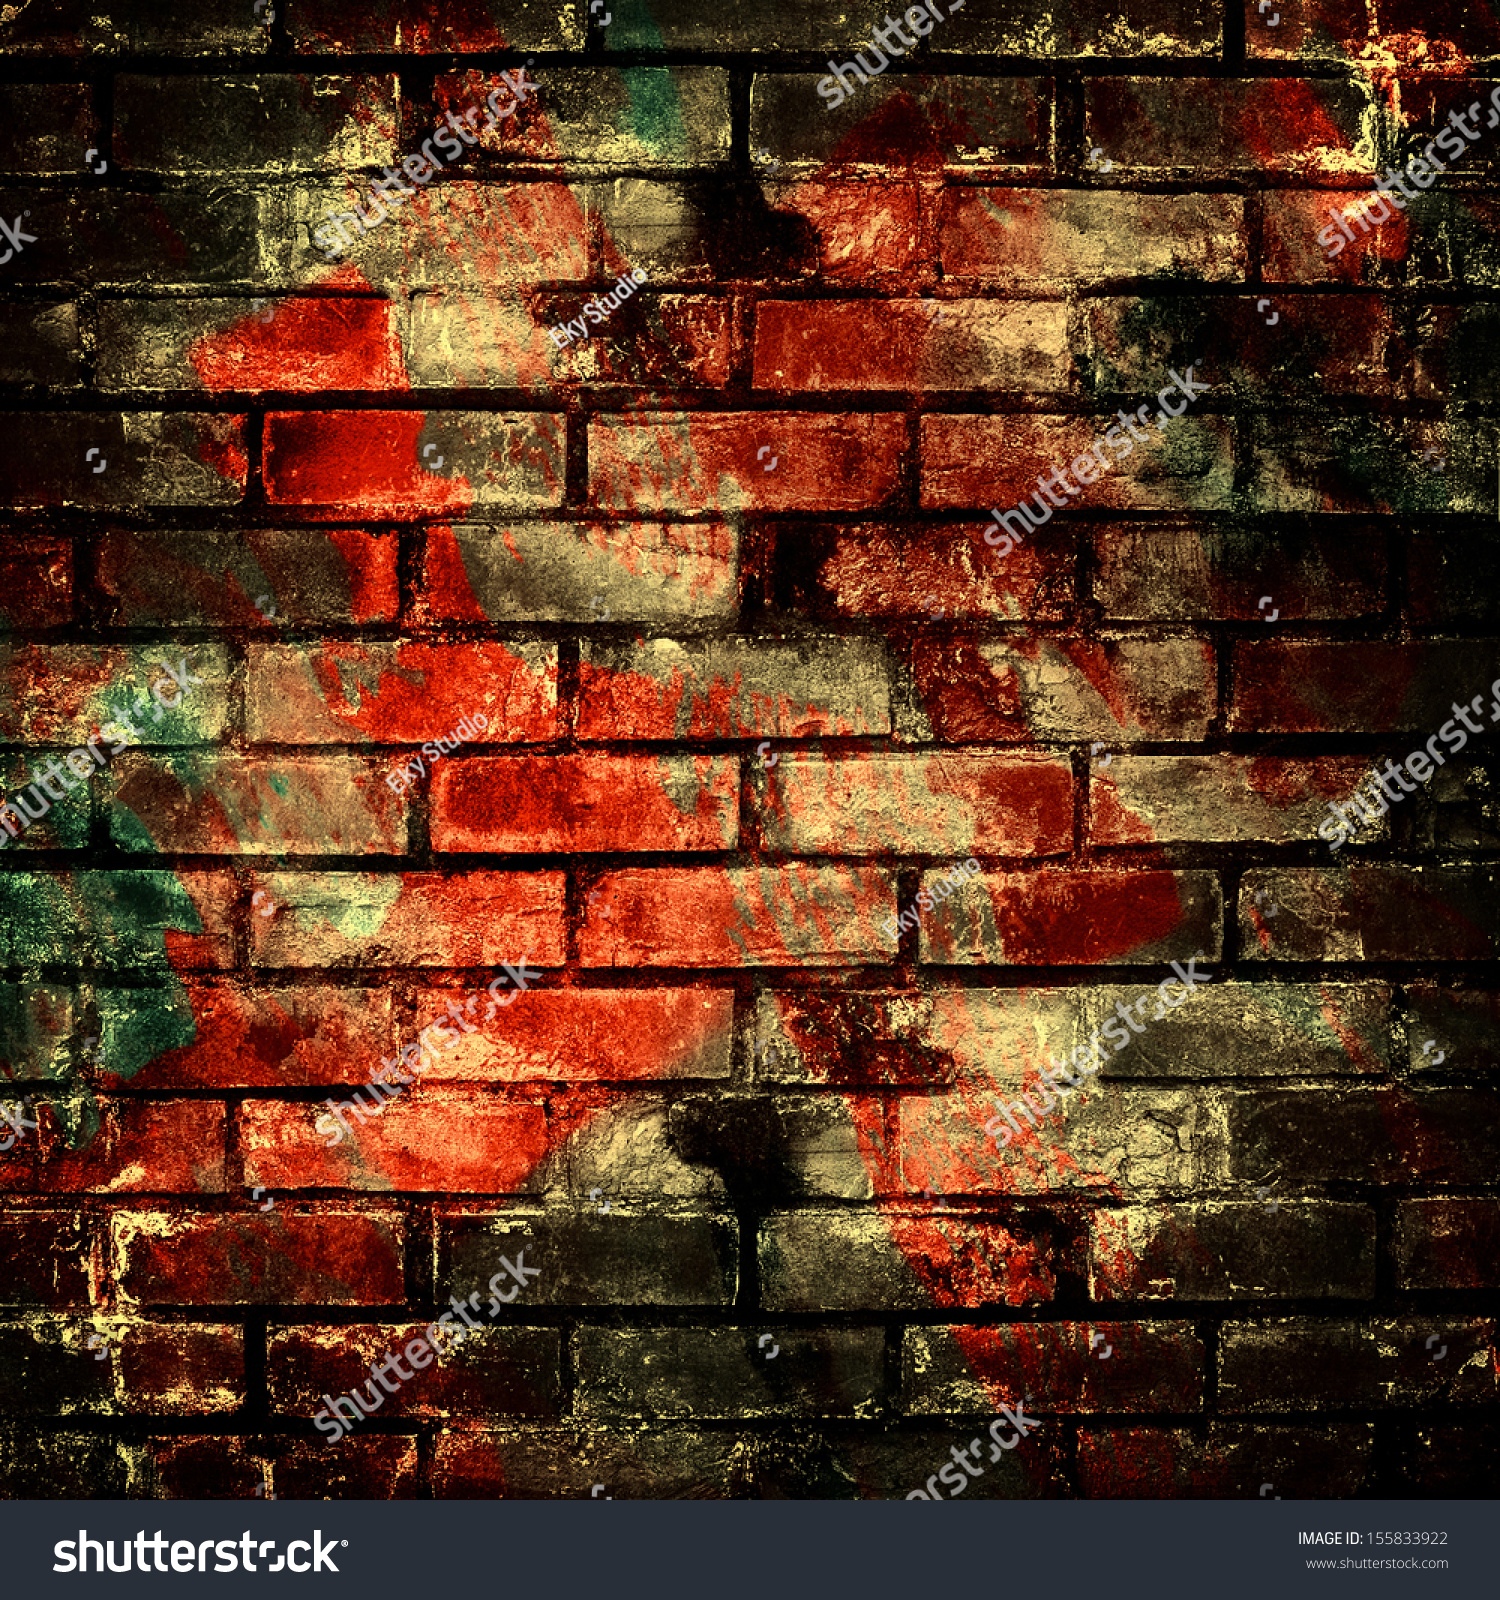 Scrawl on brick photo